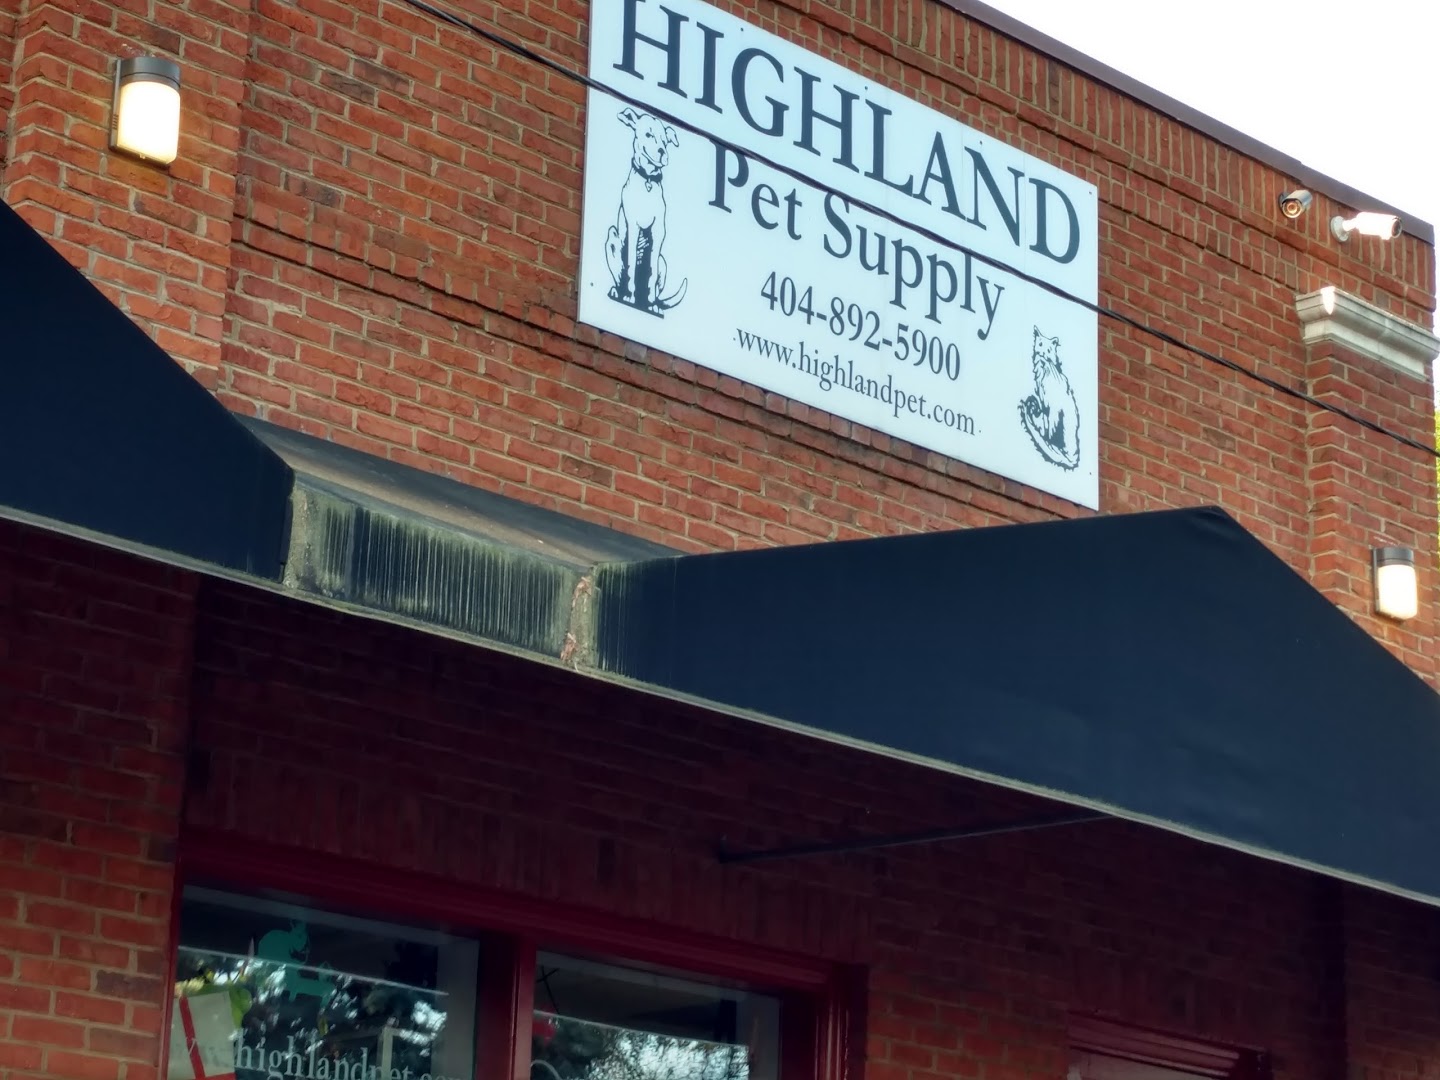 Highland Pet Supply